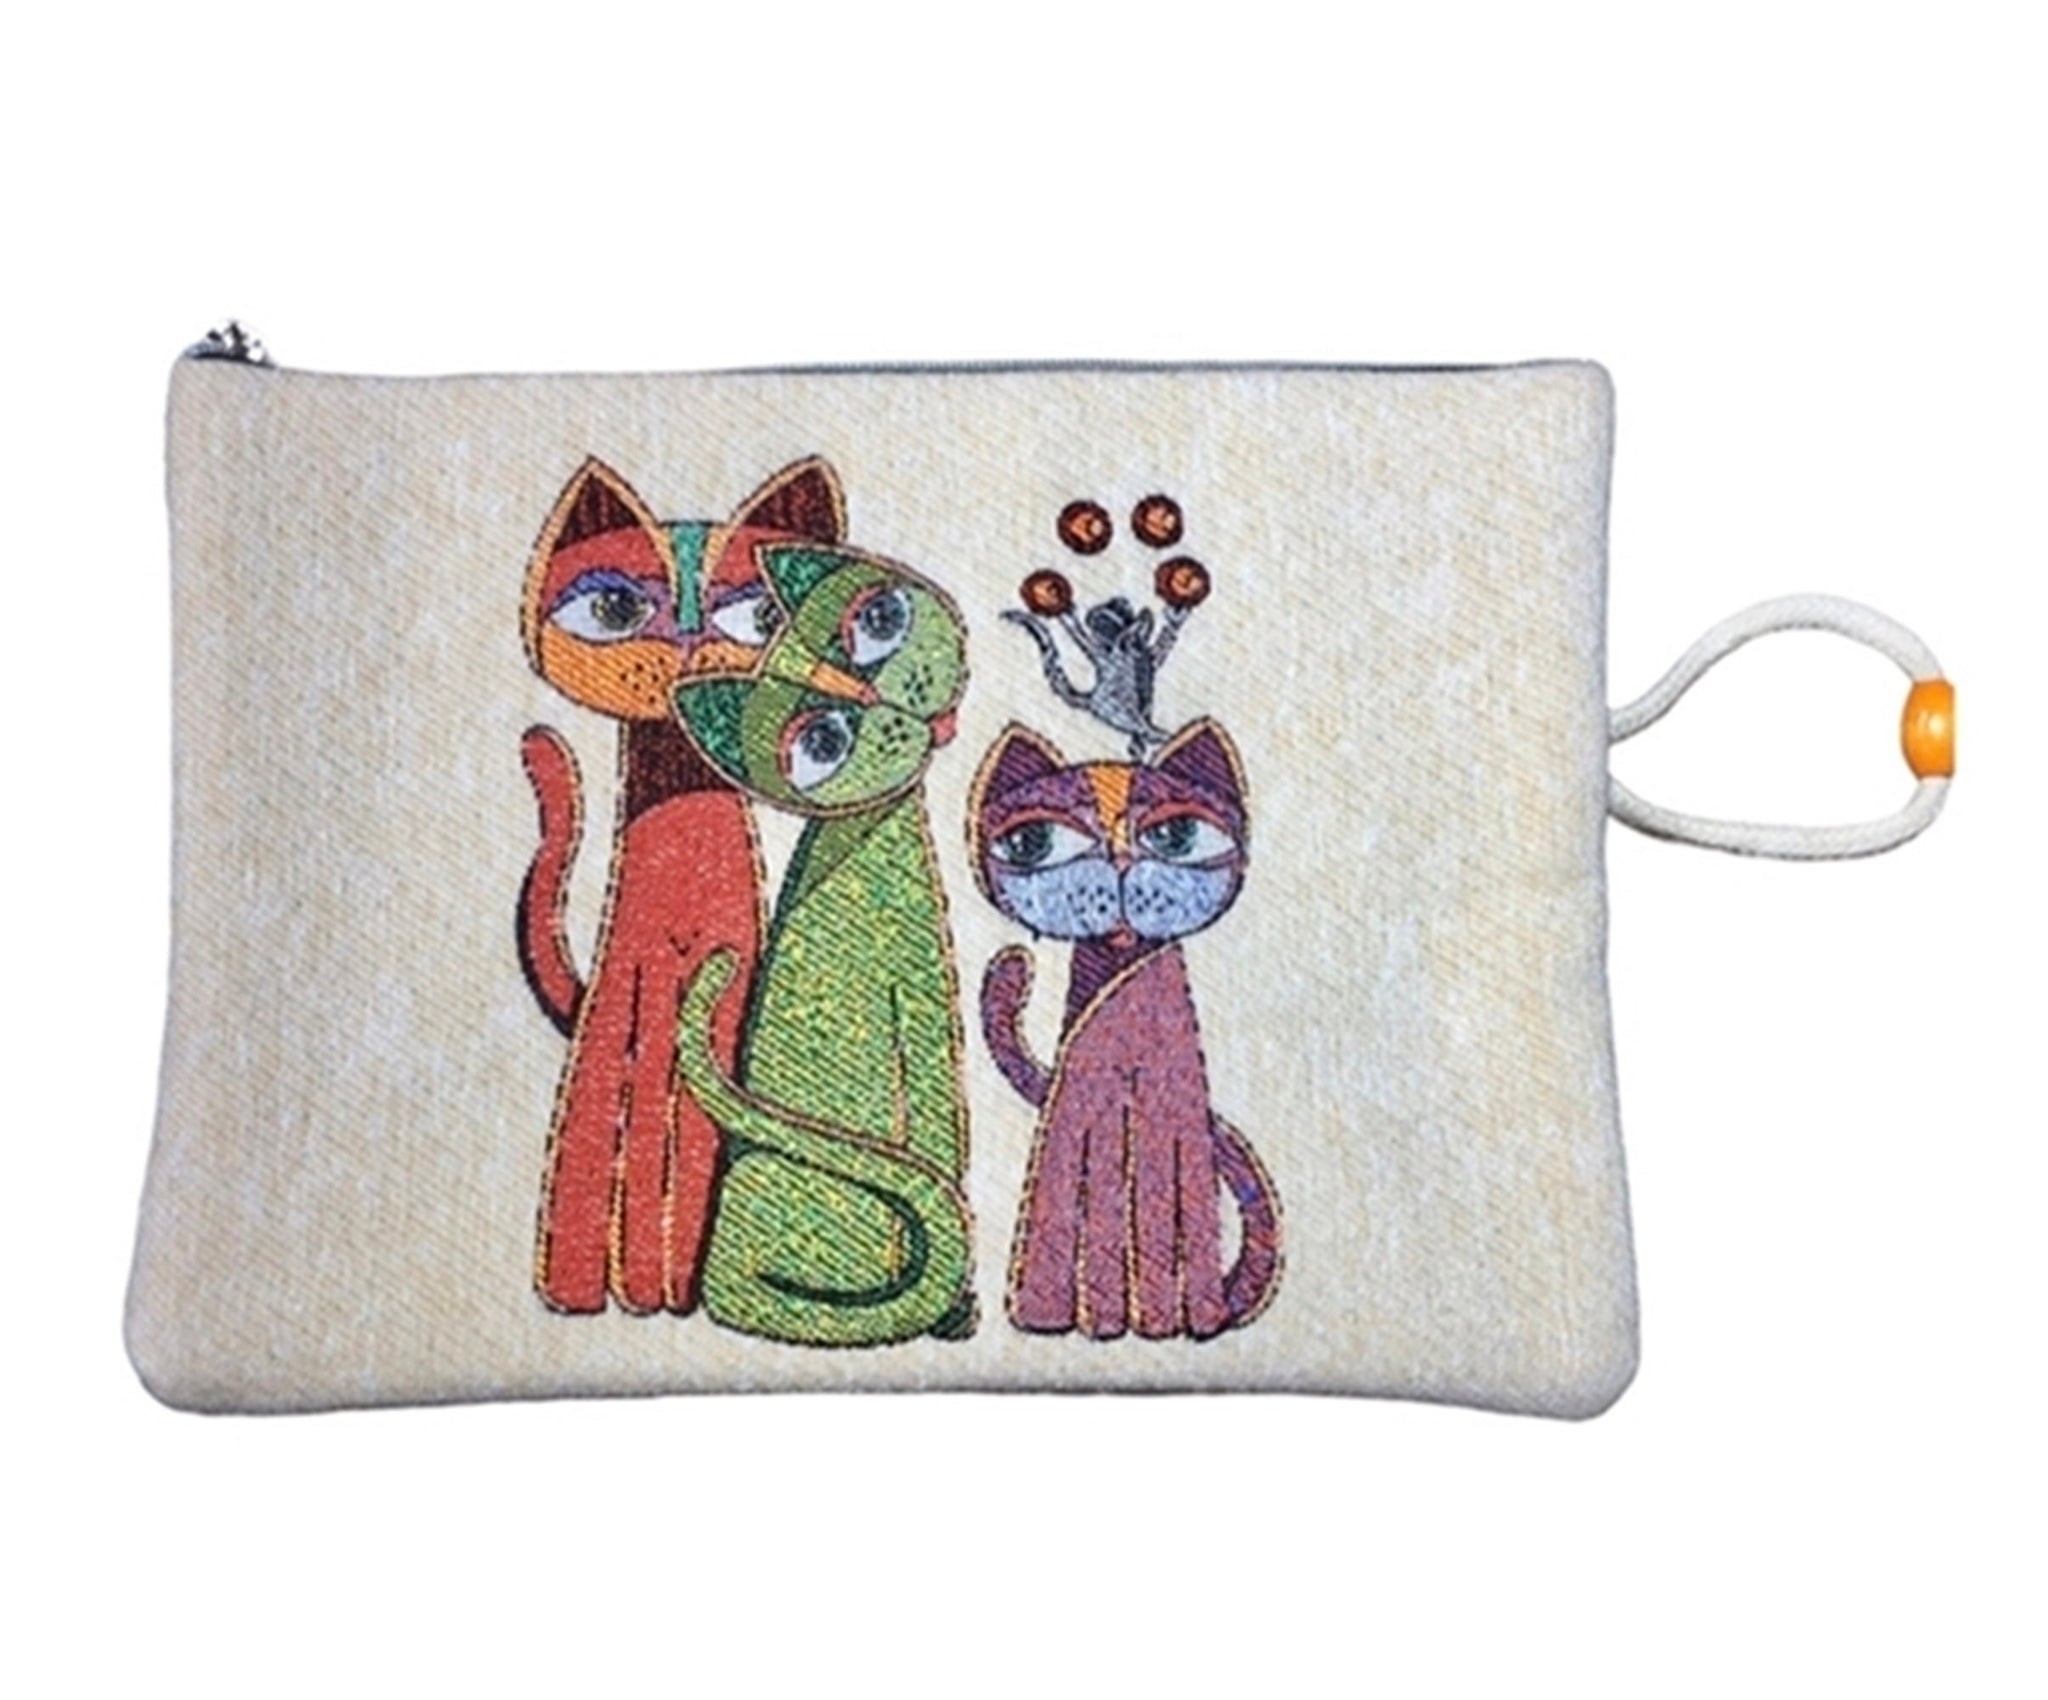 Cats Vintage Style Ethnic Turkish Boho Purse Bag | Clutch | Cosmetic bag | Hippie Bag | Bohemian Bag | Hand Bag | Clutch Purse | Kilim Bag